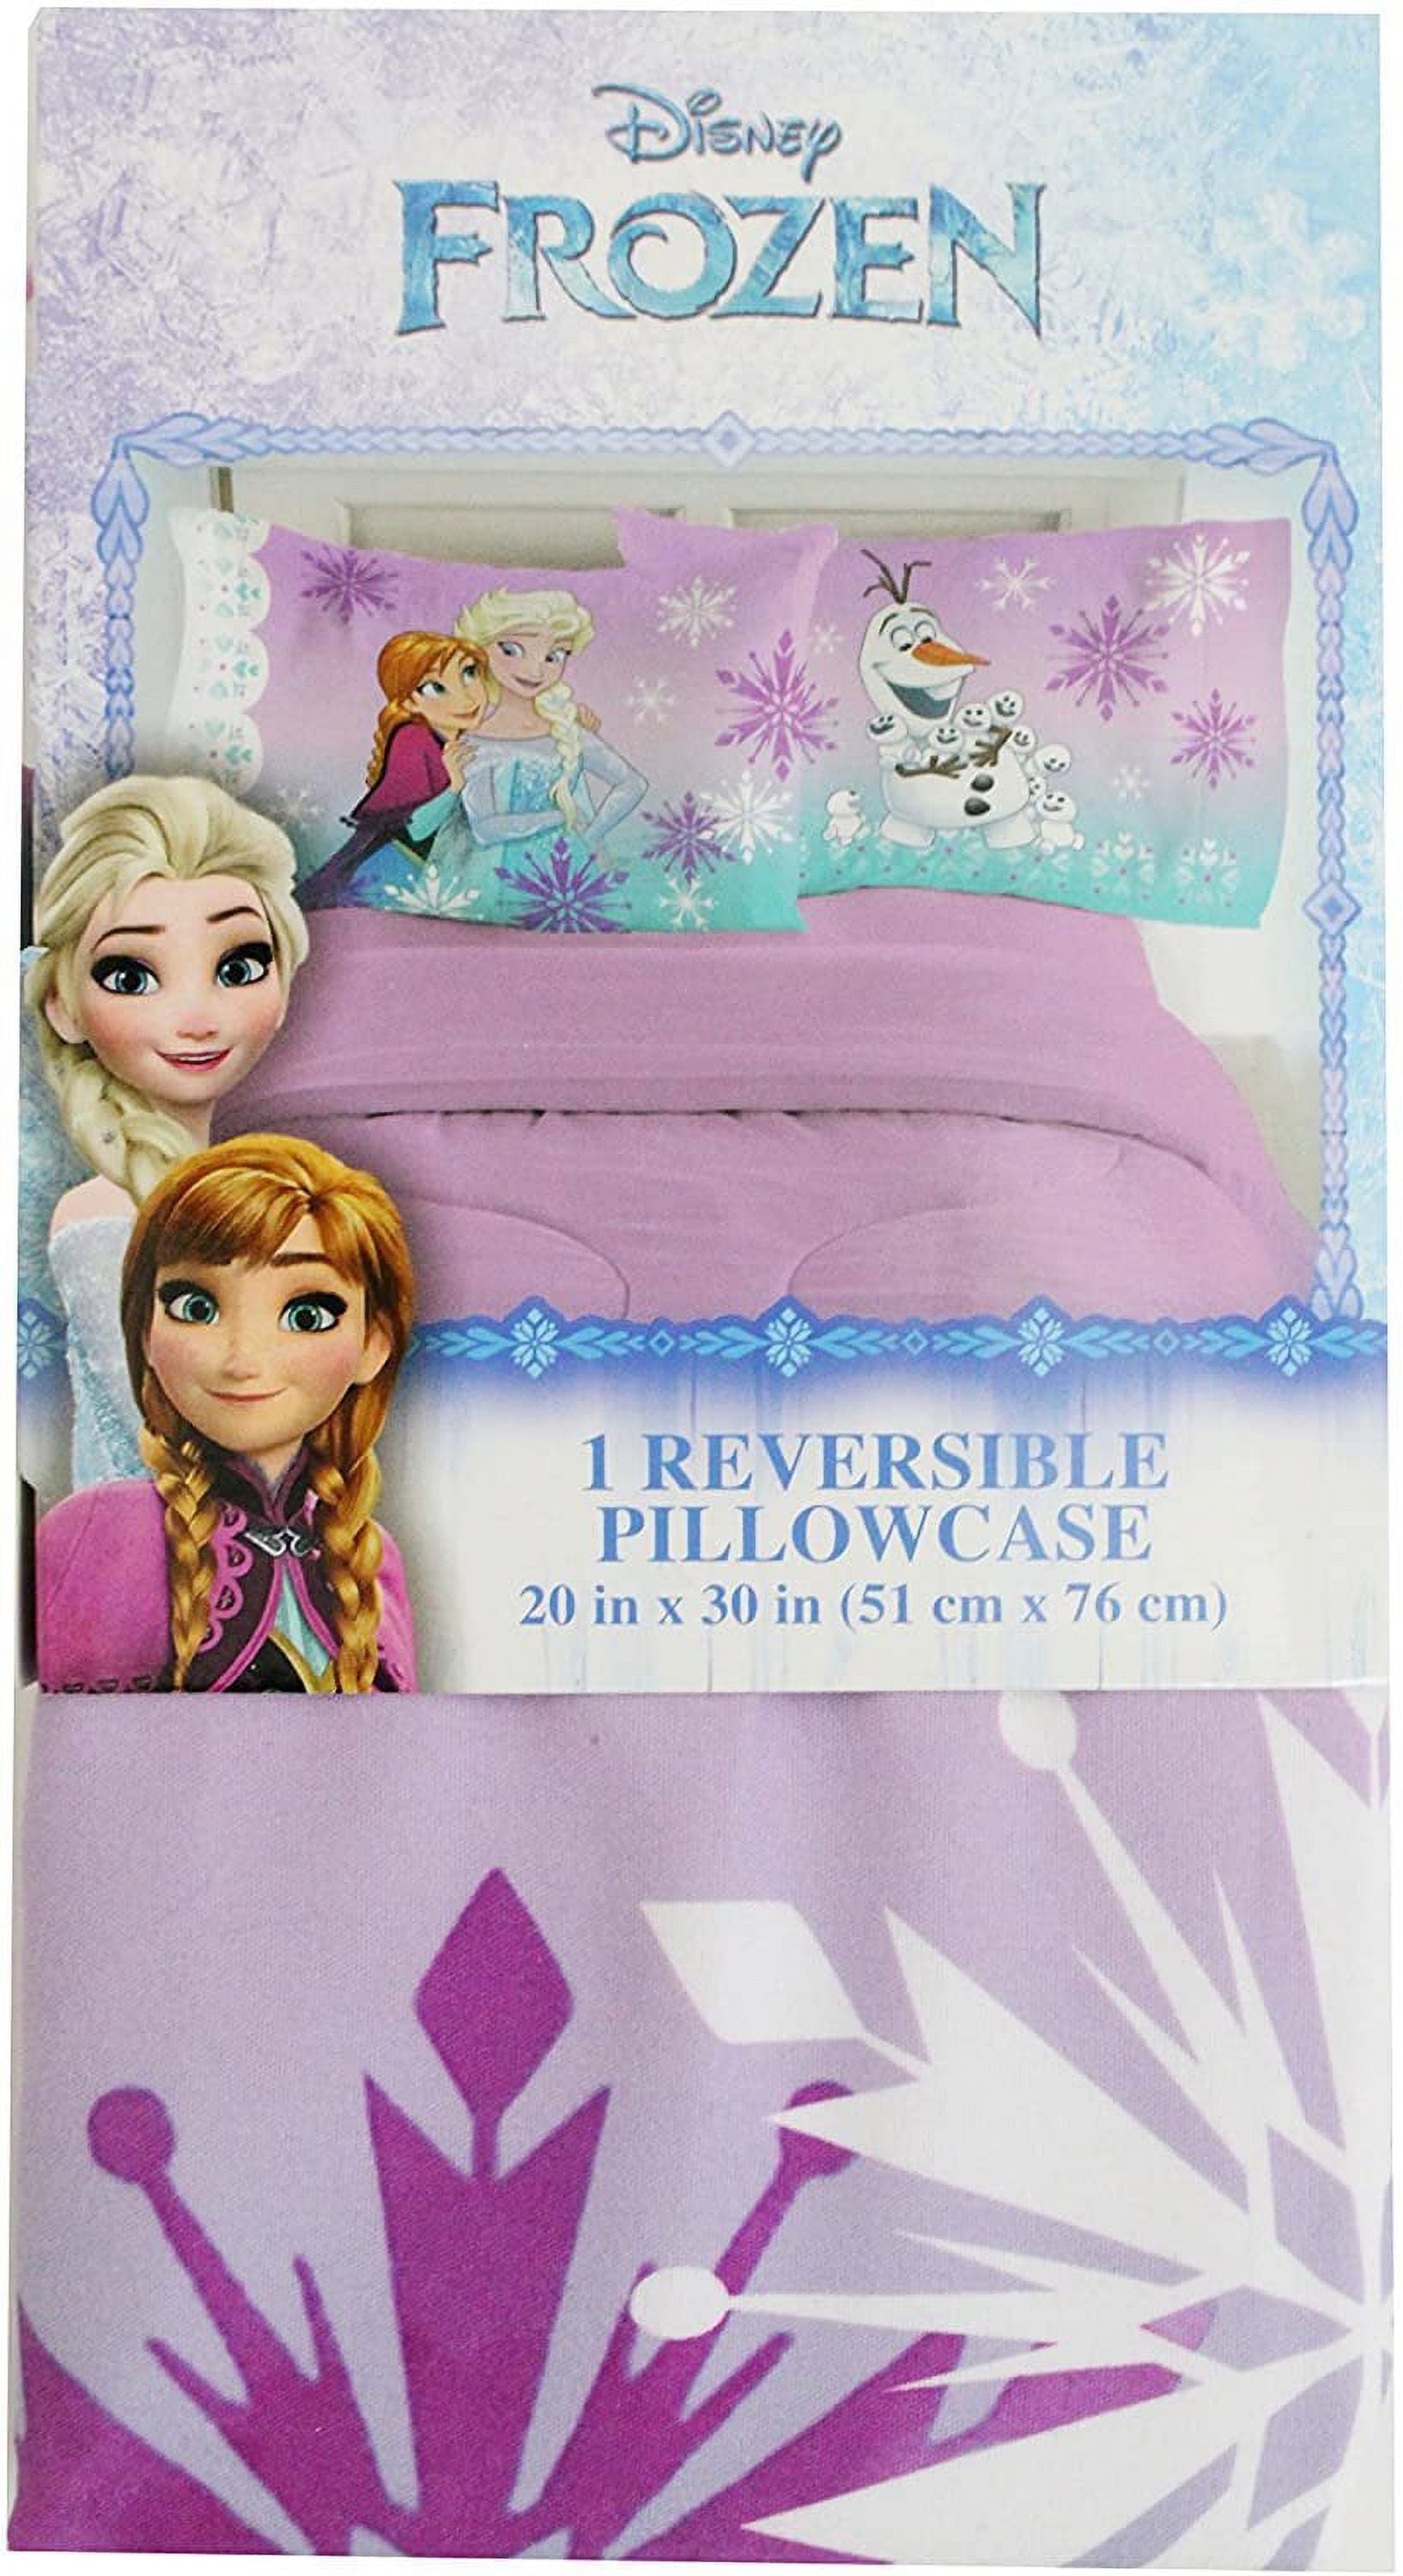 Disney Frozen Elsa Anna and Olaf Reversible Pillowcase 